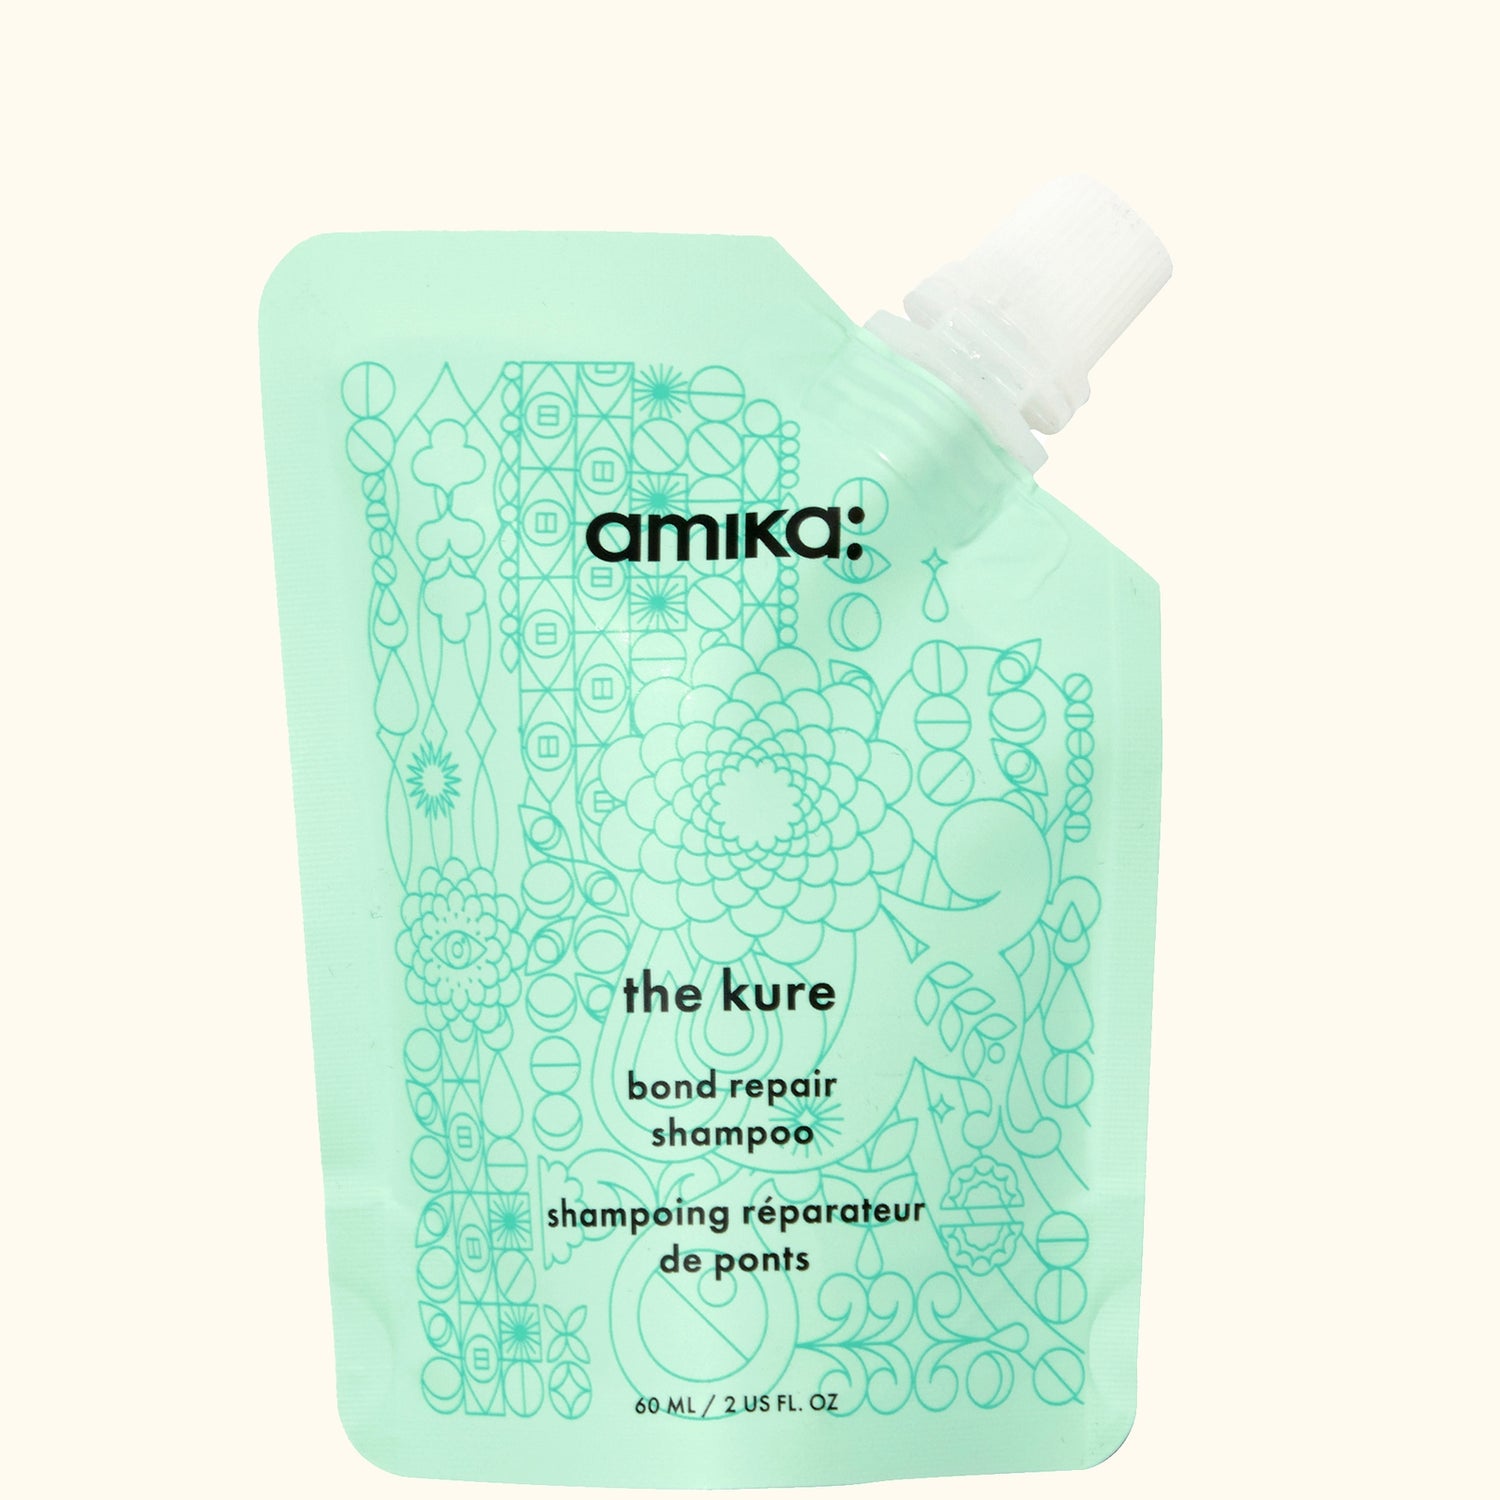 the kure bond repair shampoo